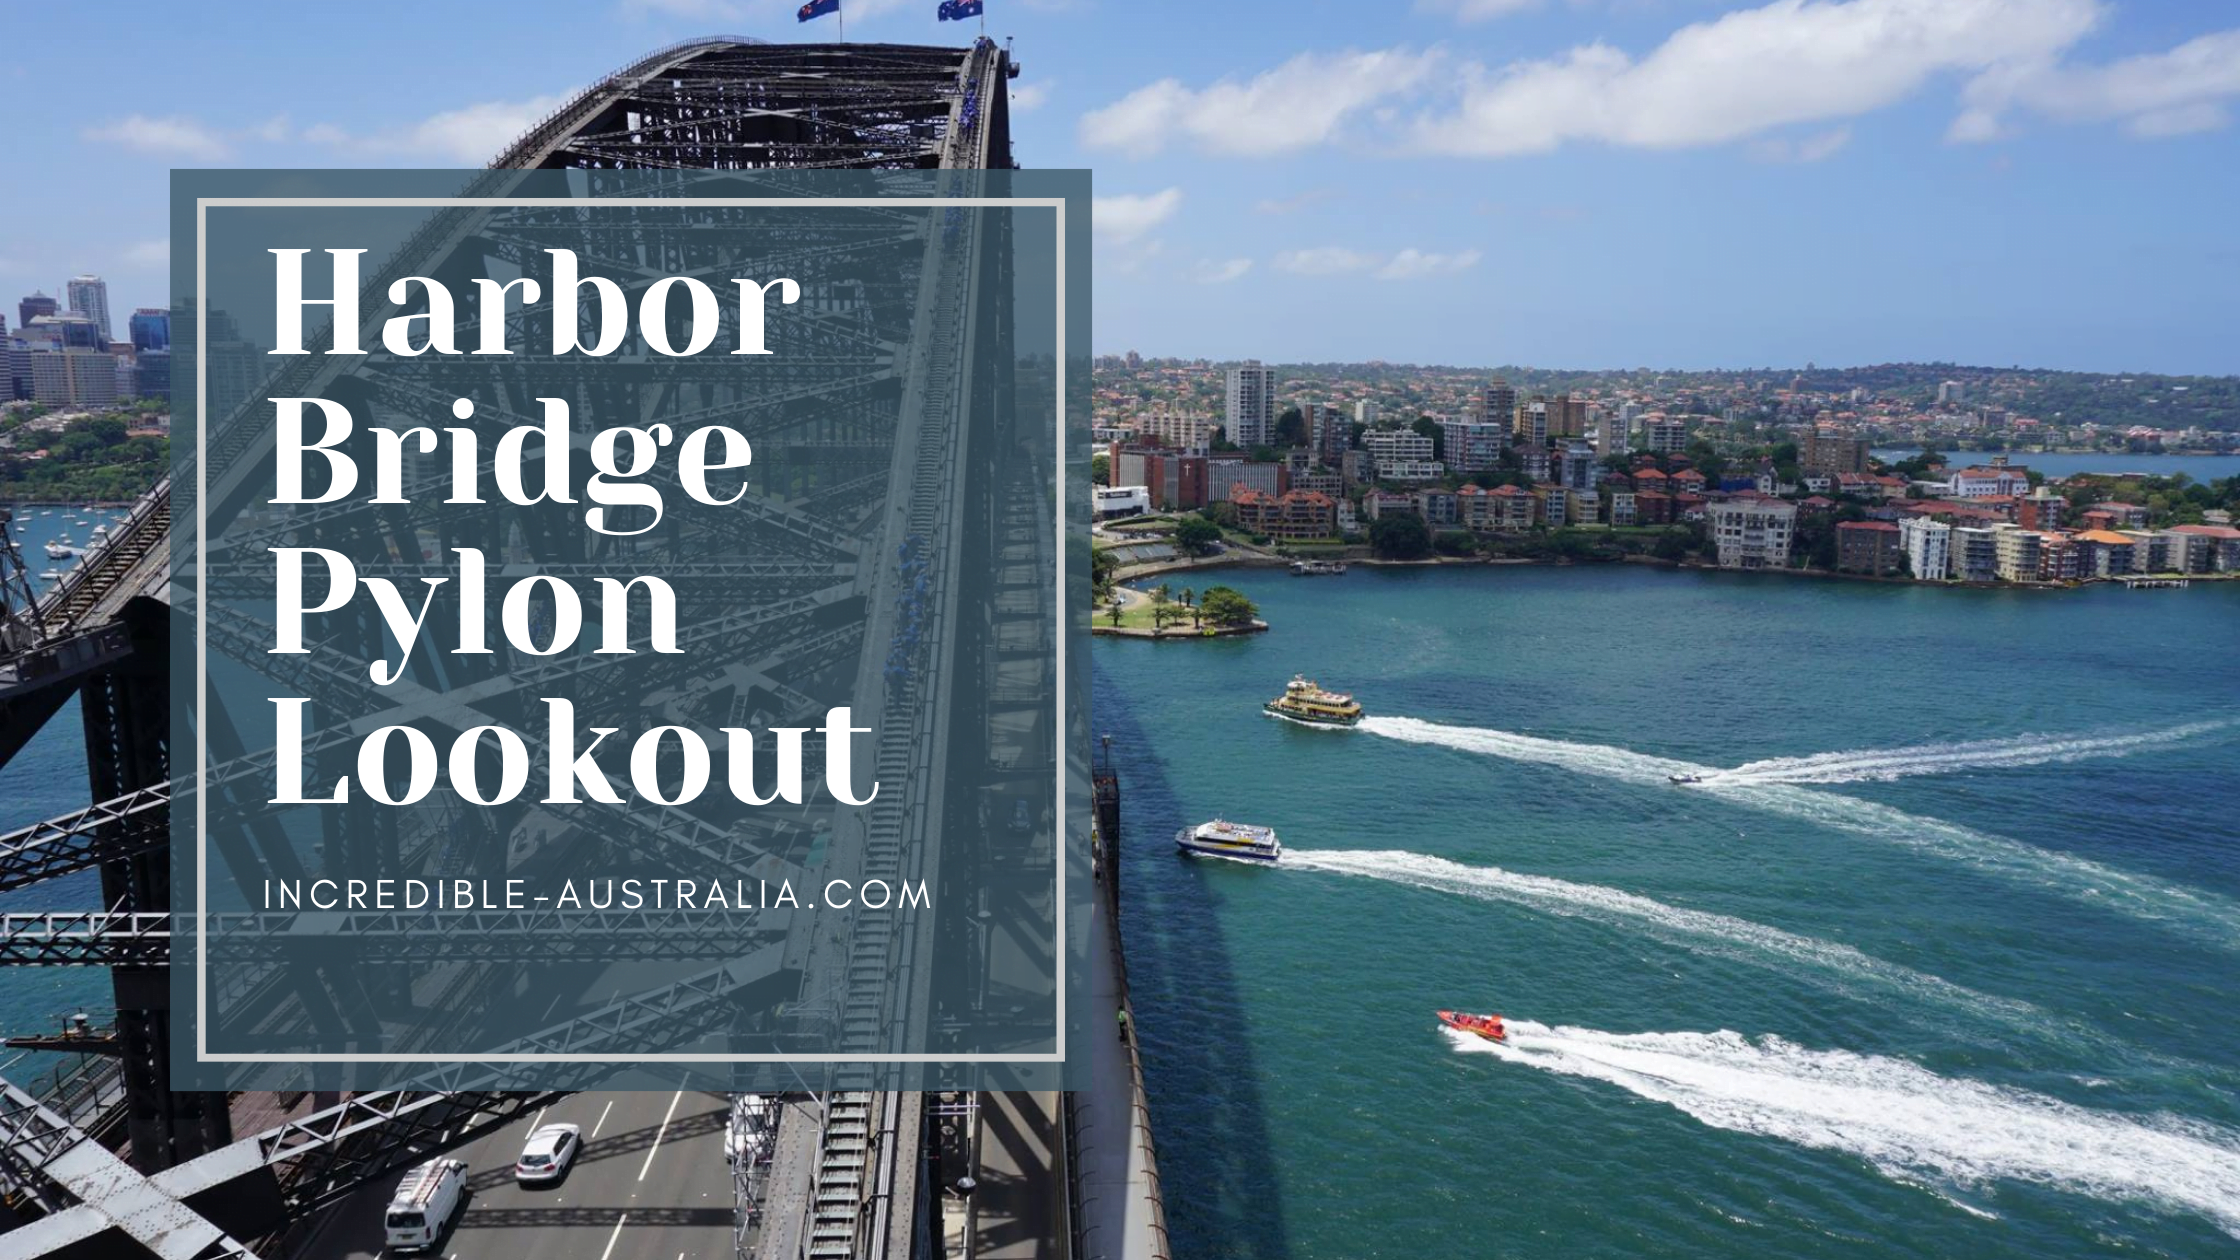 Harbor Bridge Pylon Lookout